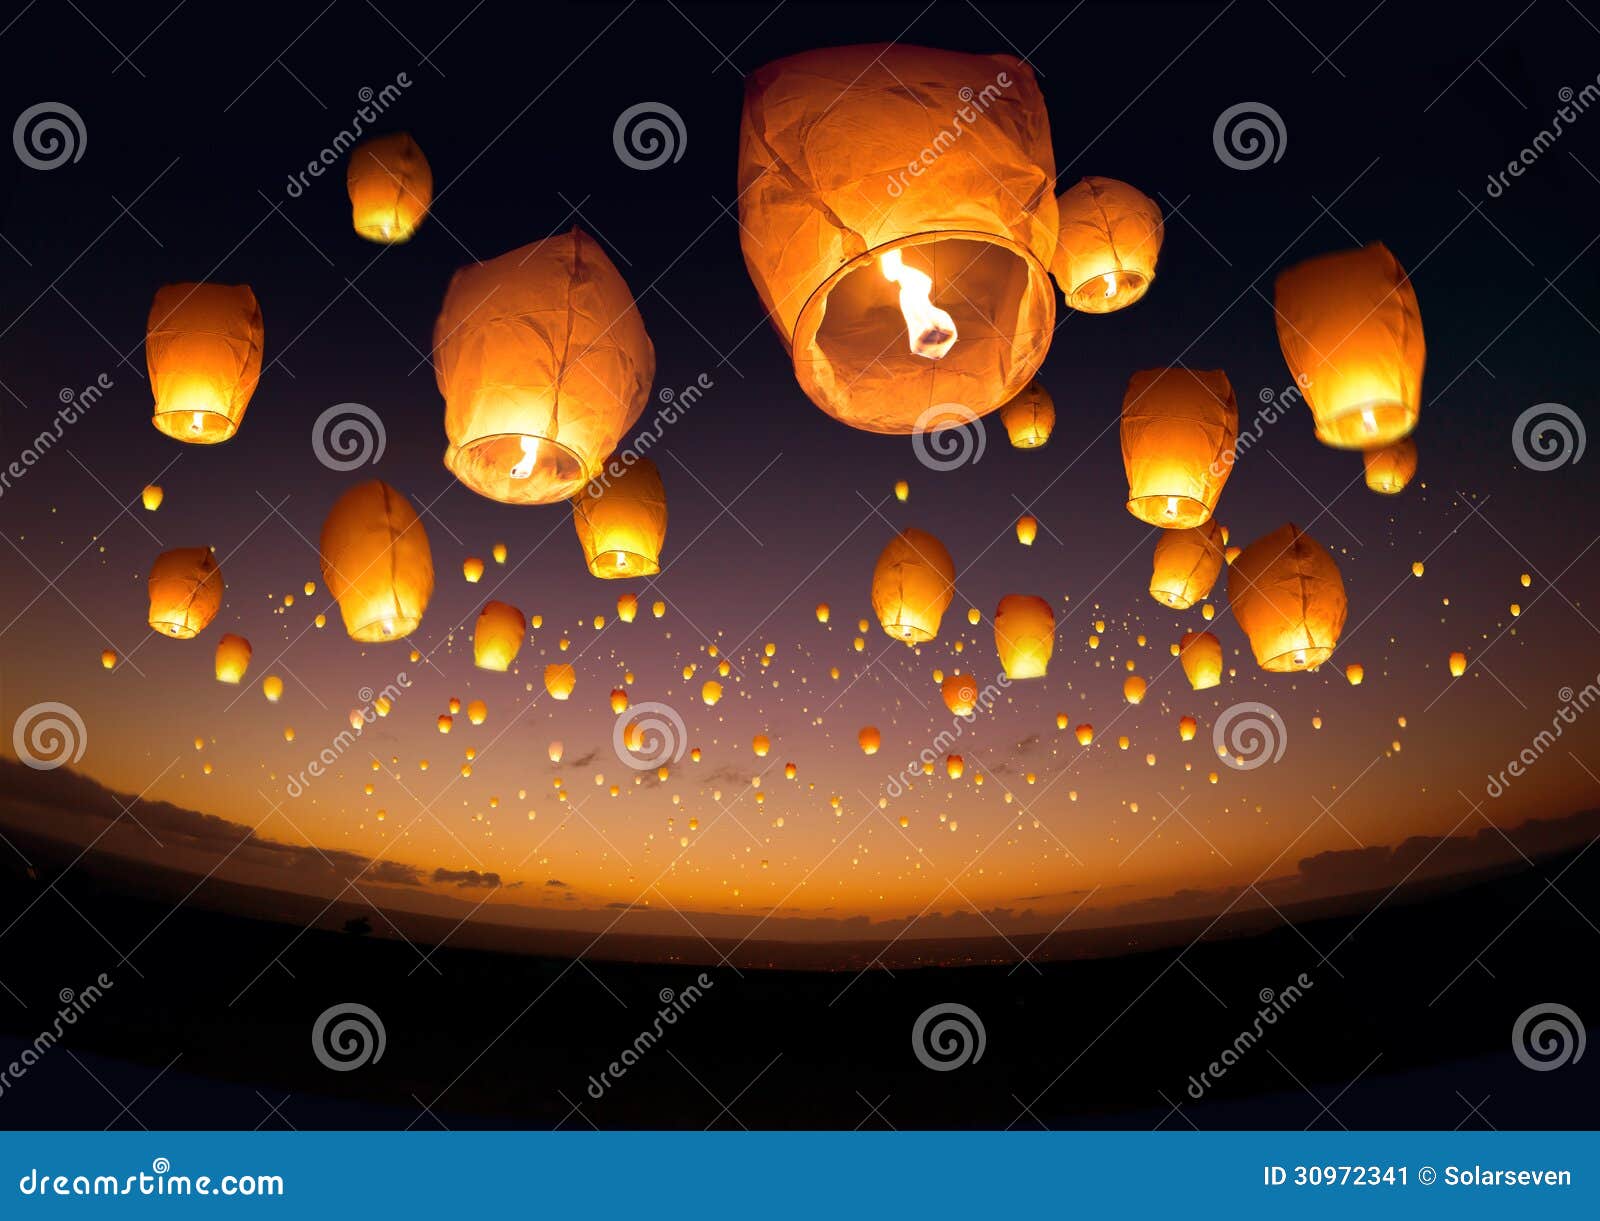 flying chinese lanterns